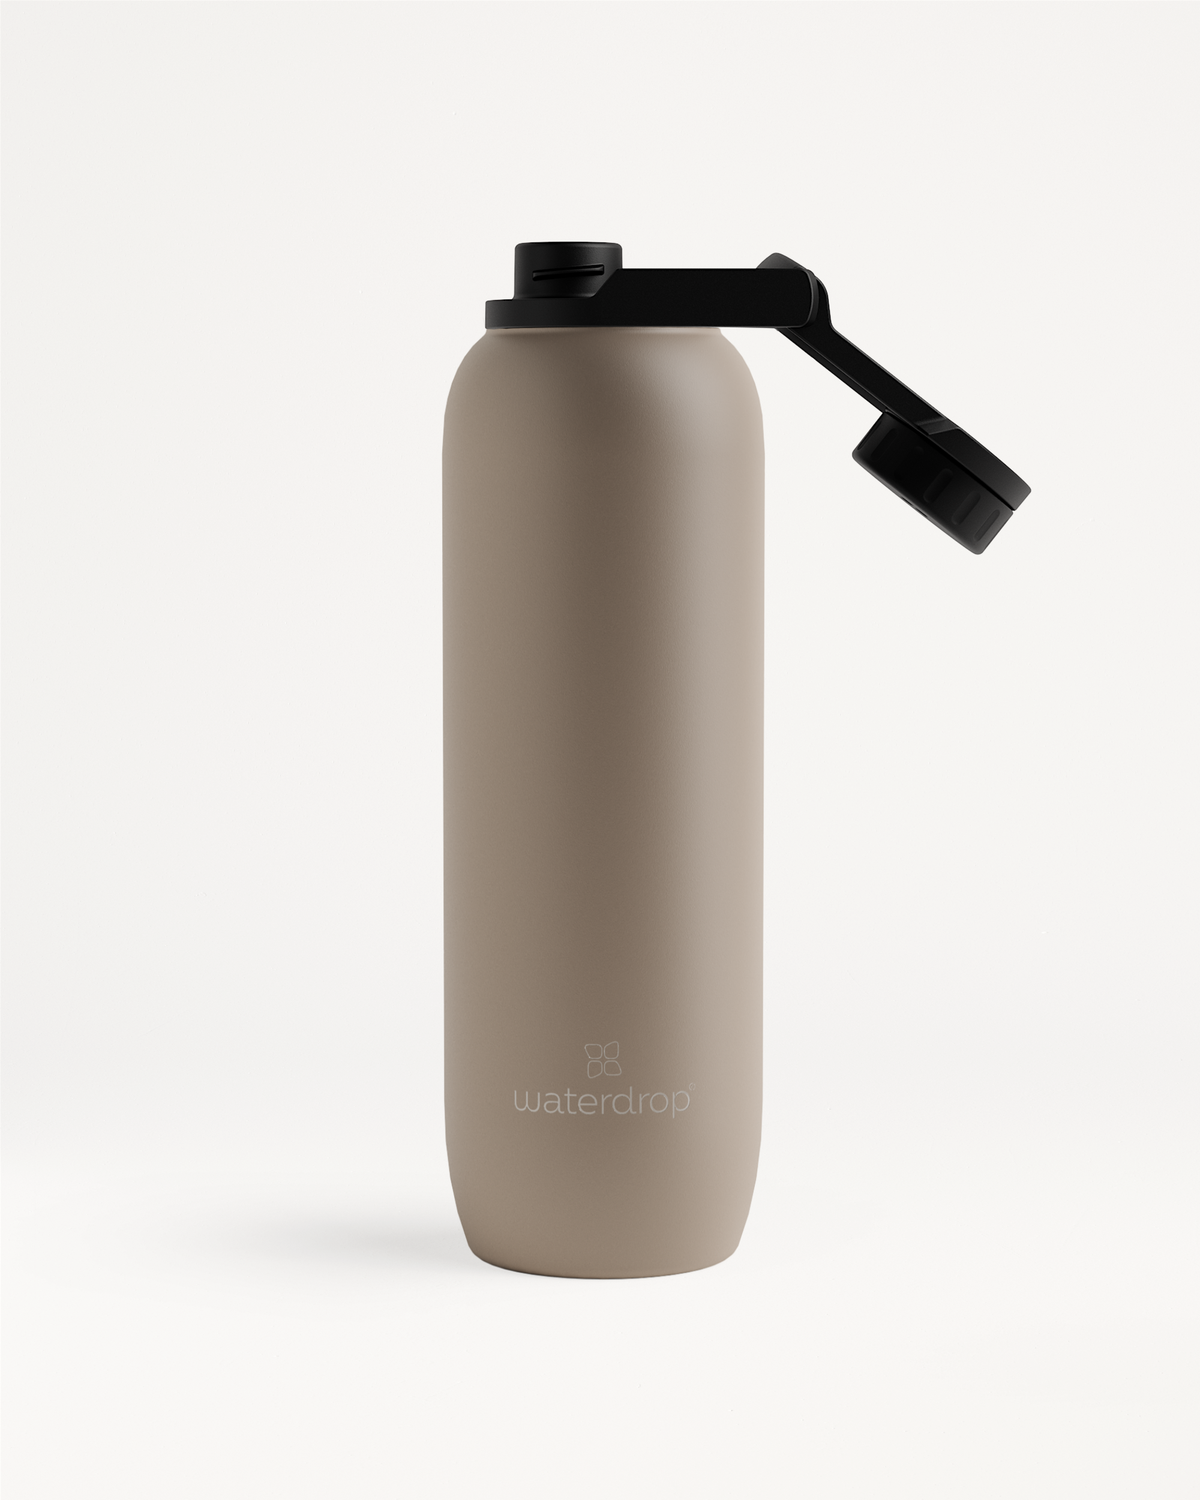 Camelbak® Flip Top Water Bottle – Simon's Rock Store